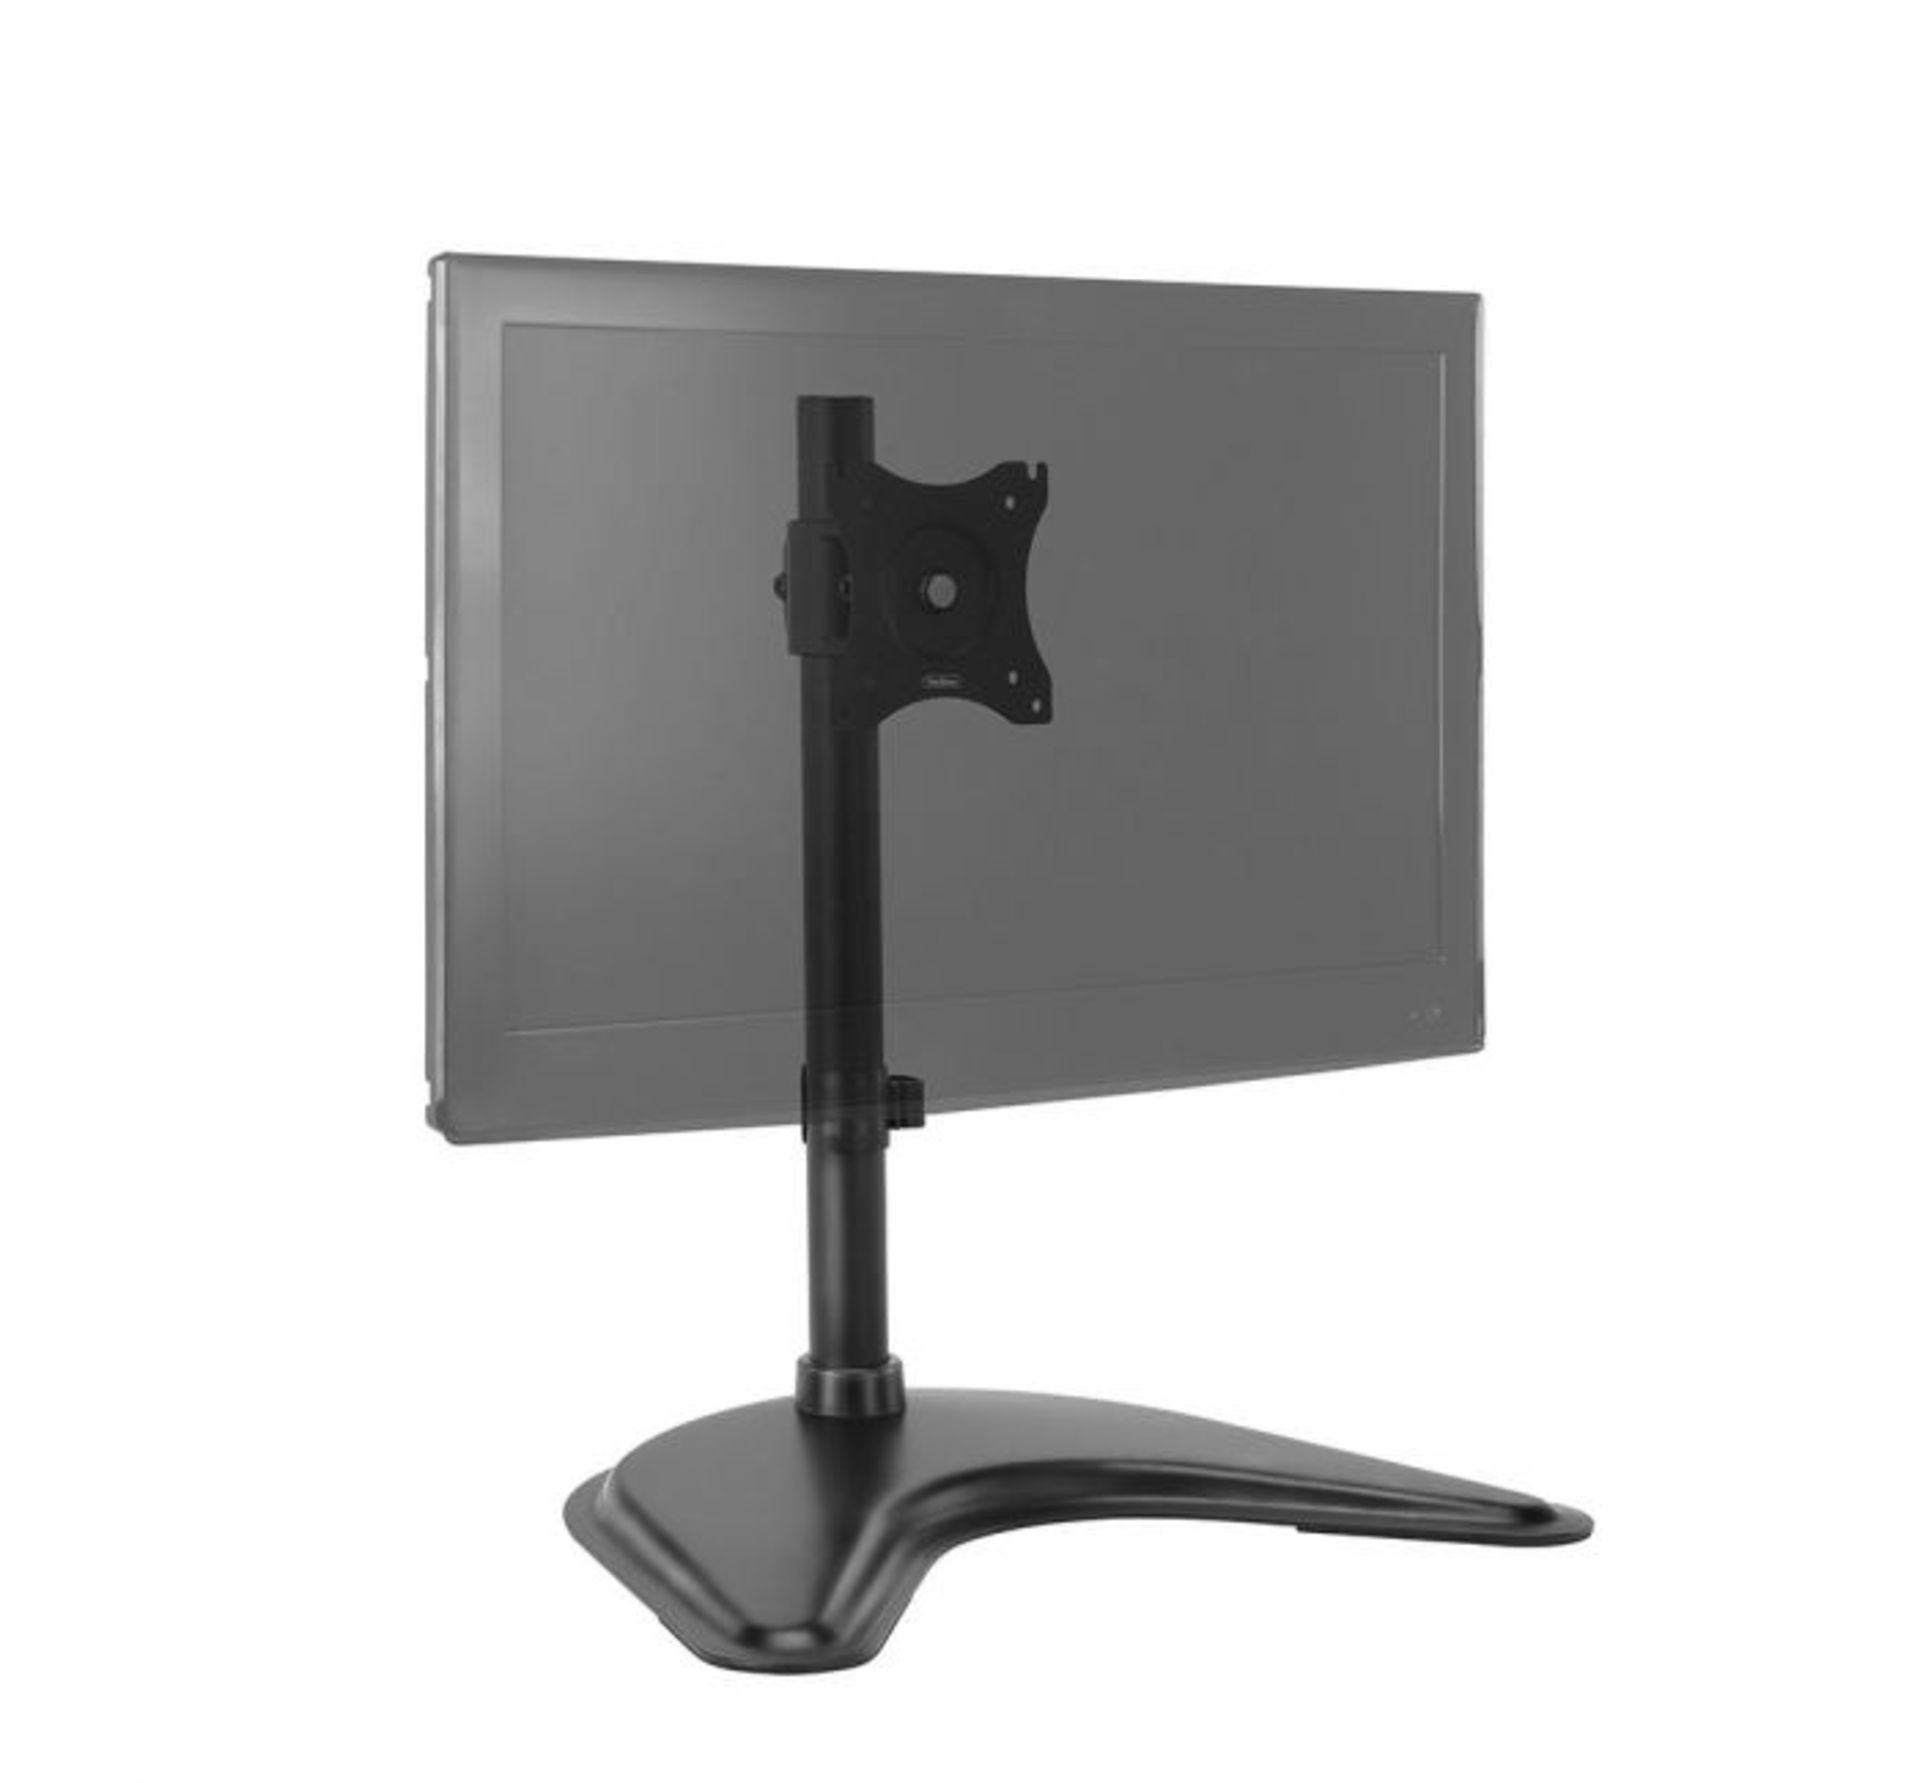 (AP19) Single Monitor Desk Mount Heavy duty single monitor mount - maximum weight capacity 10k... - Image 3 of 3